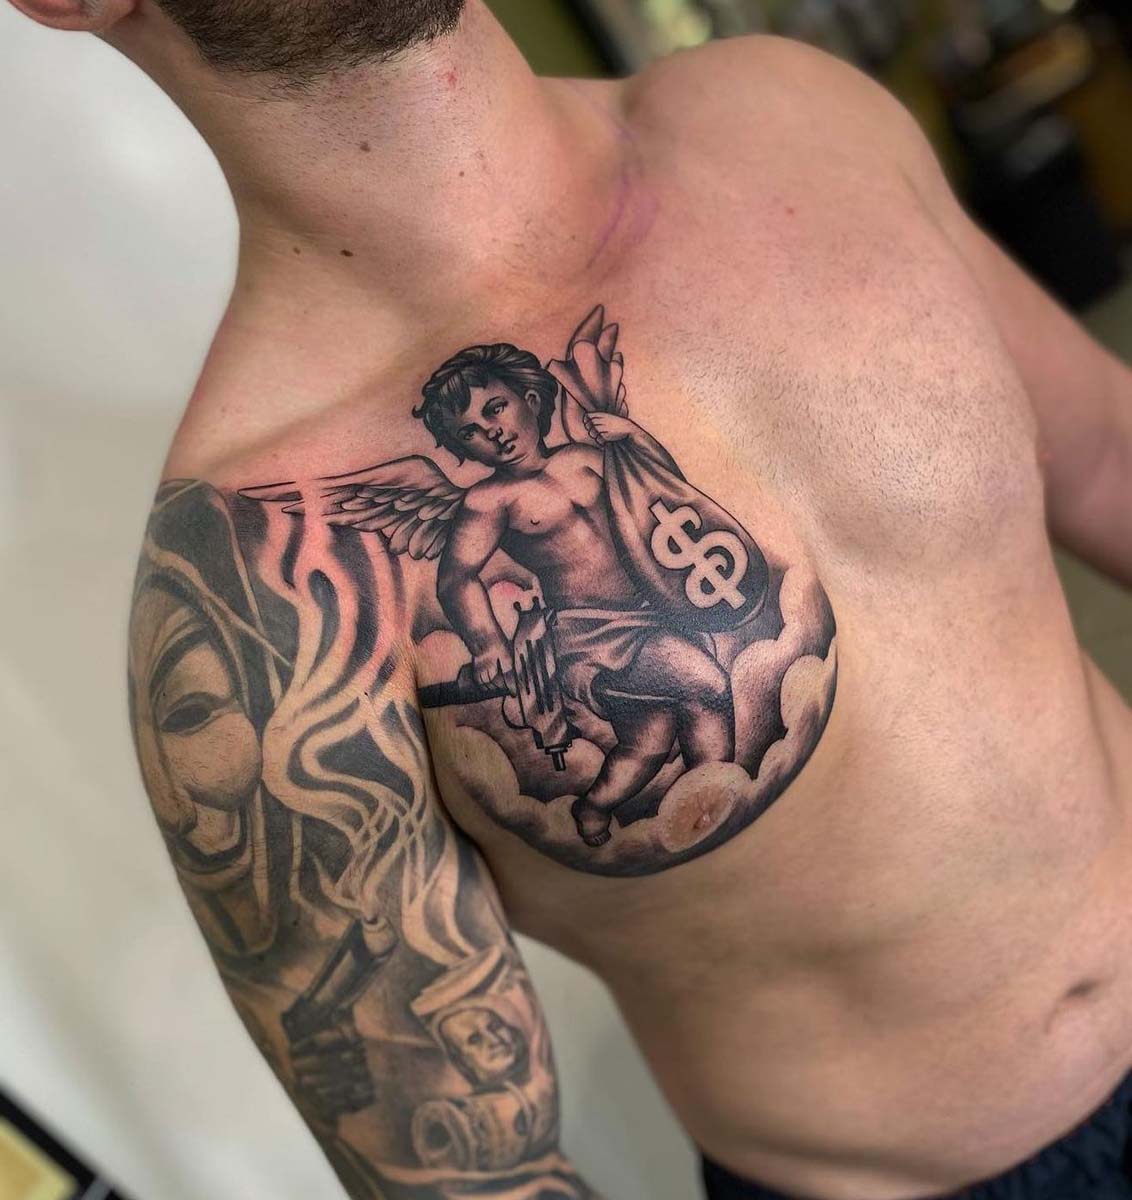 Hot As Love Tattoo  Making some progress on justinwalker64 s David  Goliath  tattoo  Facebook